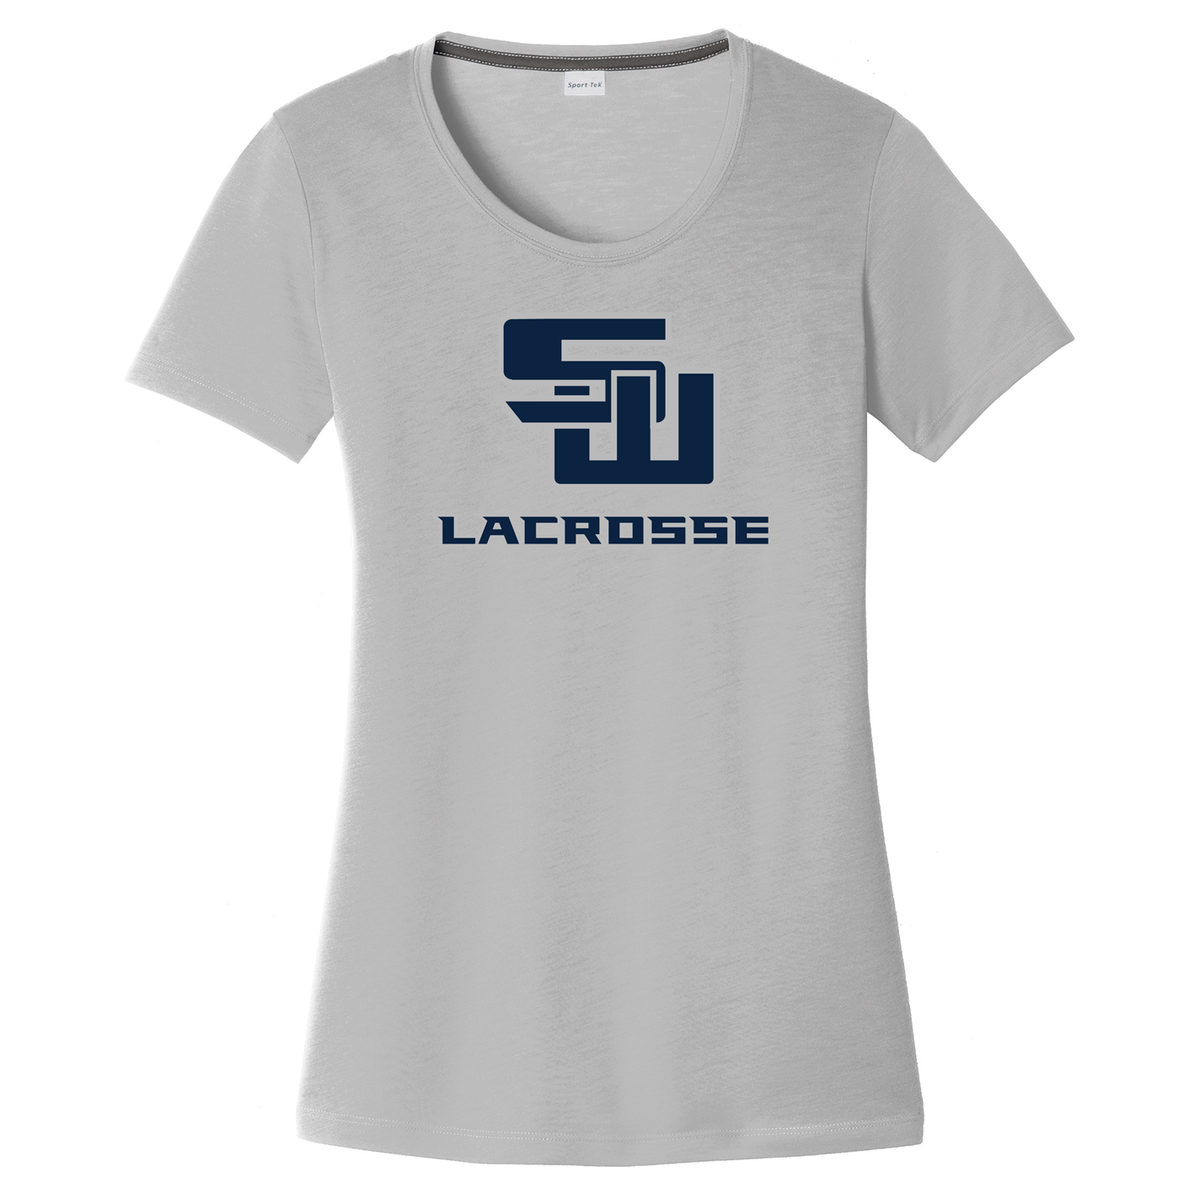 Smithtown West Lacrosse Women's CottonTouch Performance T-Shirt